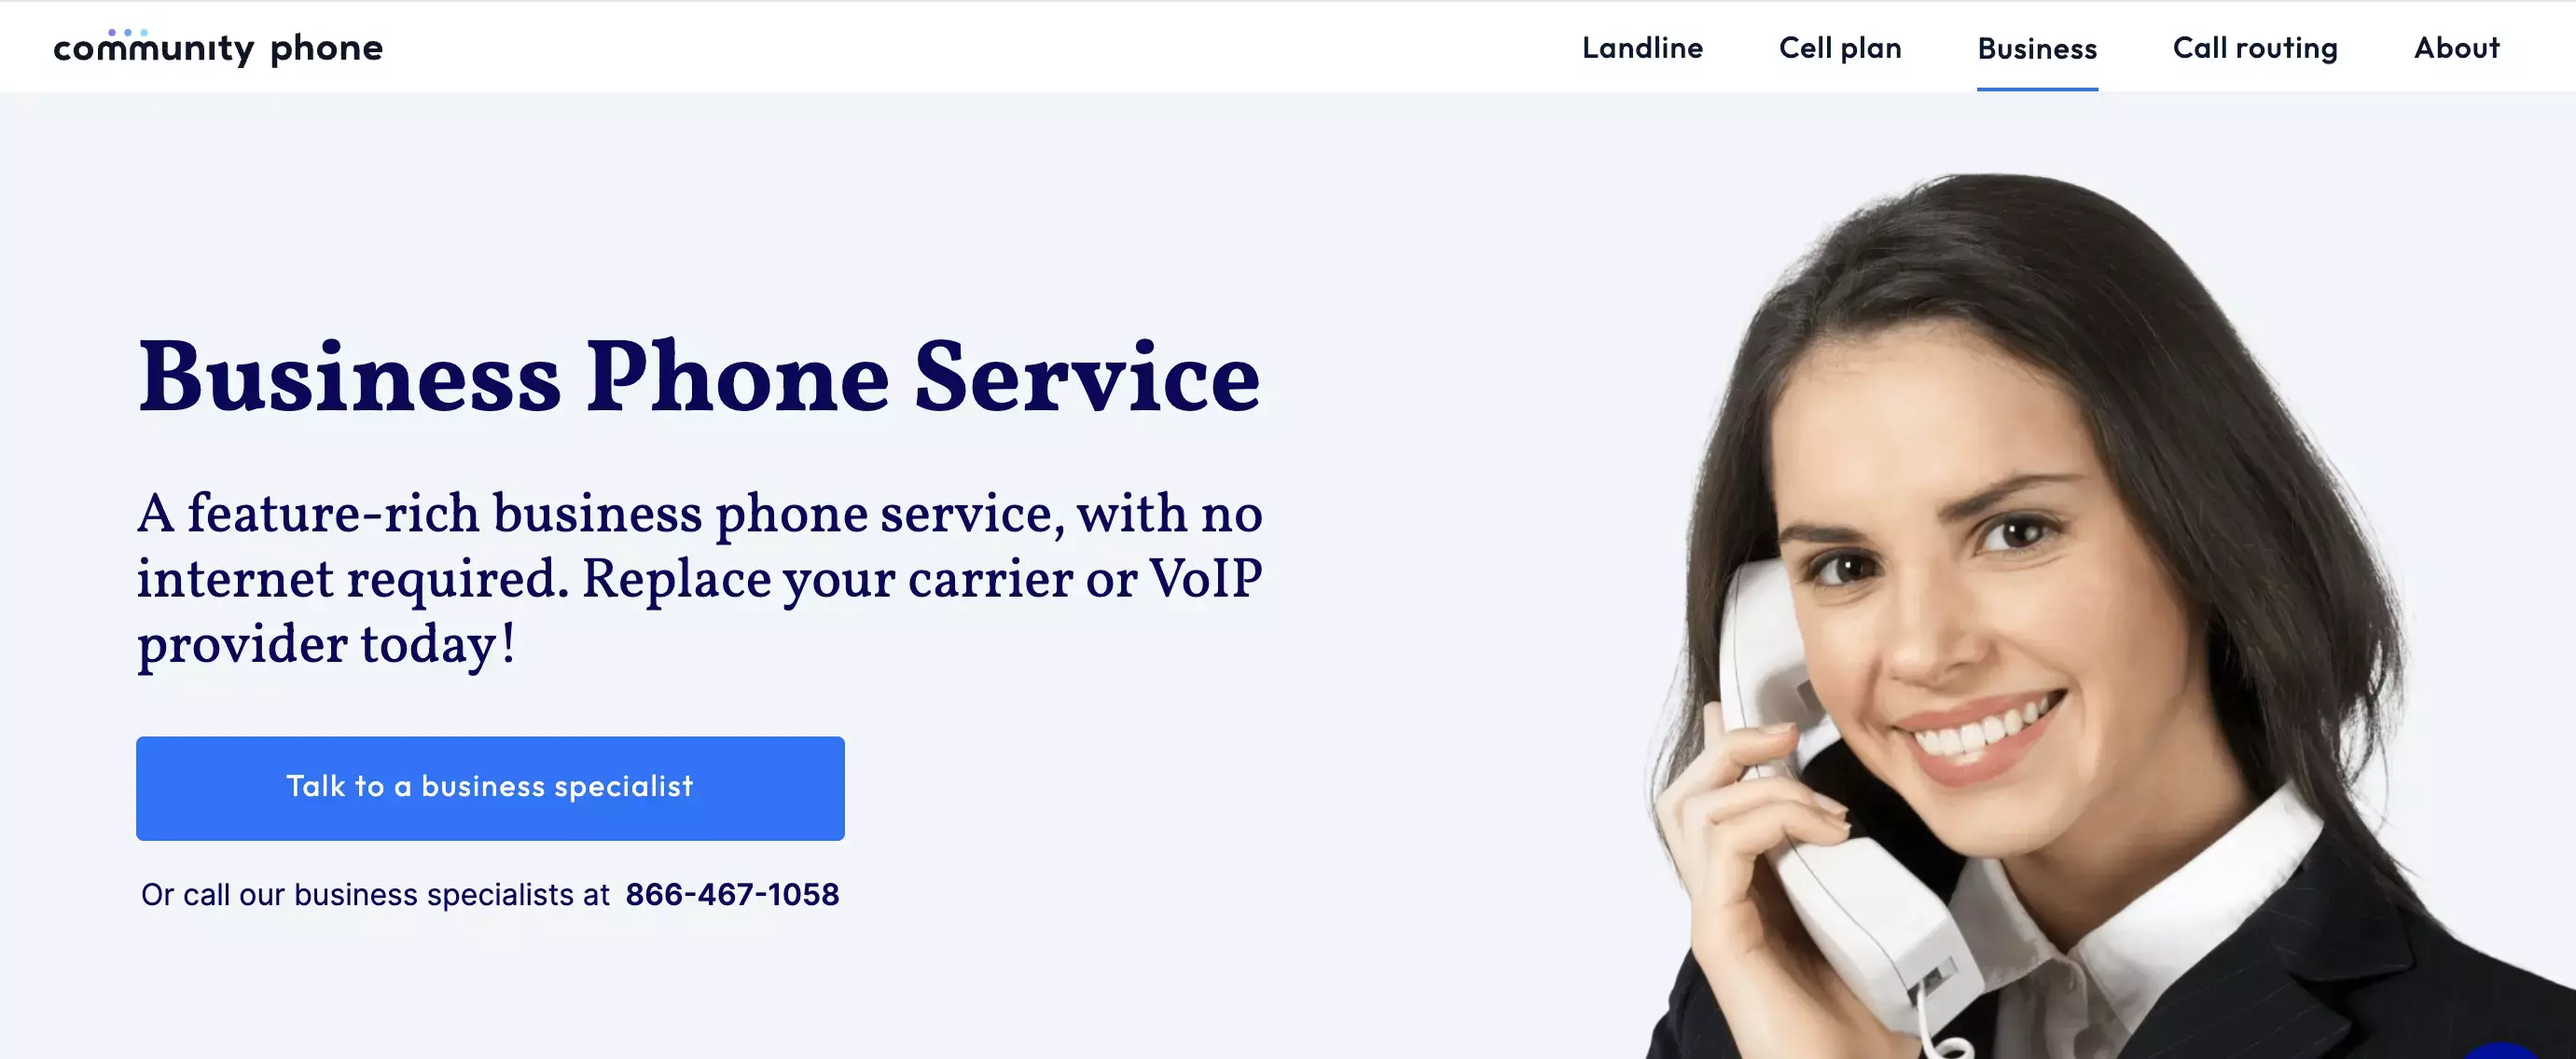 An image of Community Phone's business landline service